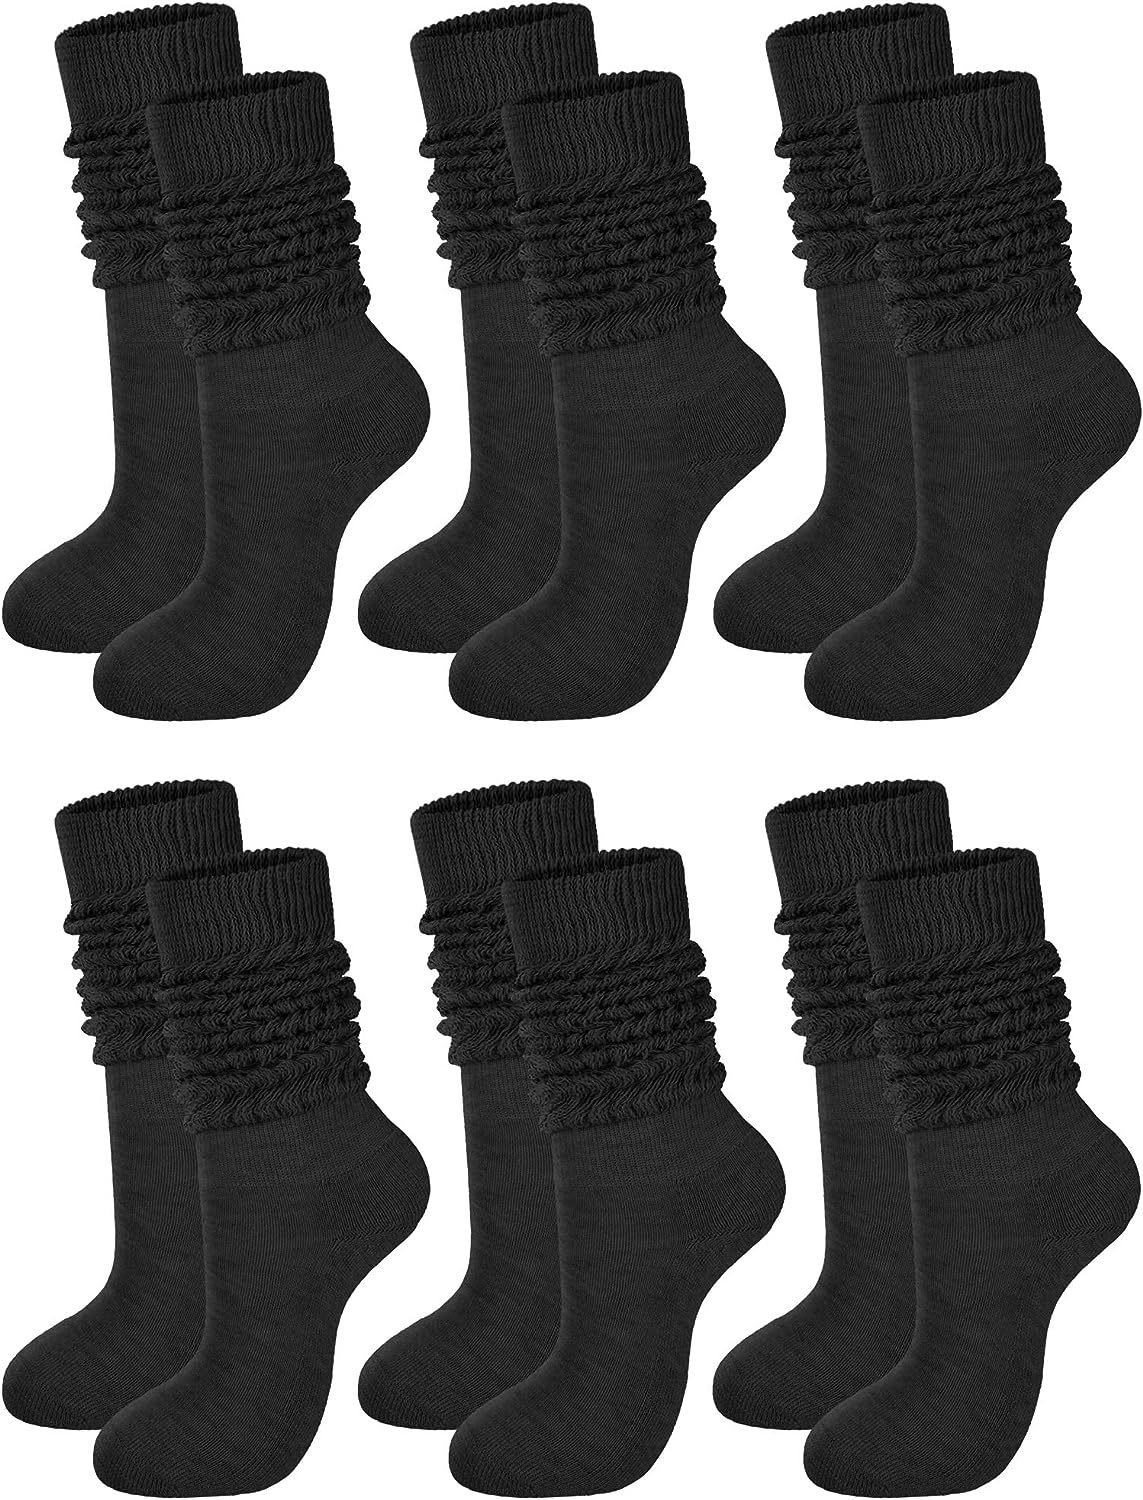 JOCMIC 3 Pairs Slouch Socks Women Extra Long Knee High Scrunch Socks Size  6-11, Black+white+grey, 6-11 : : Clothing & Accessories